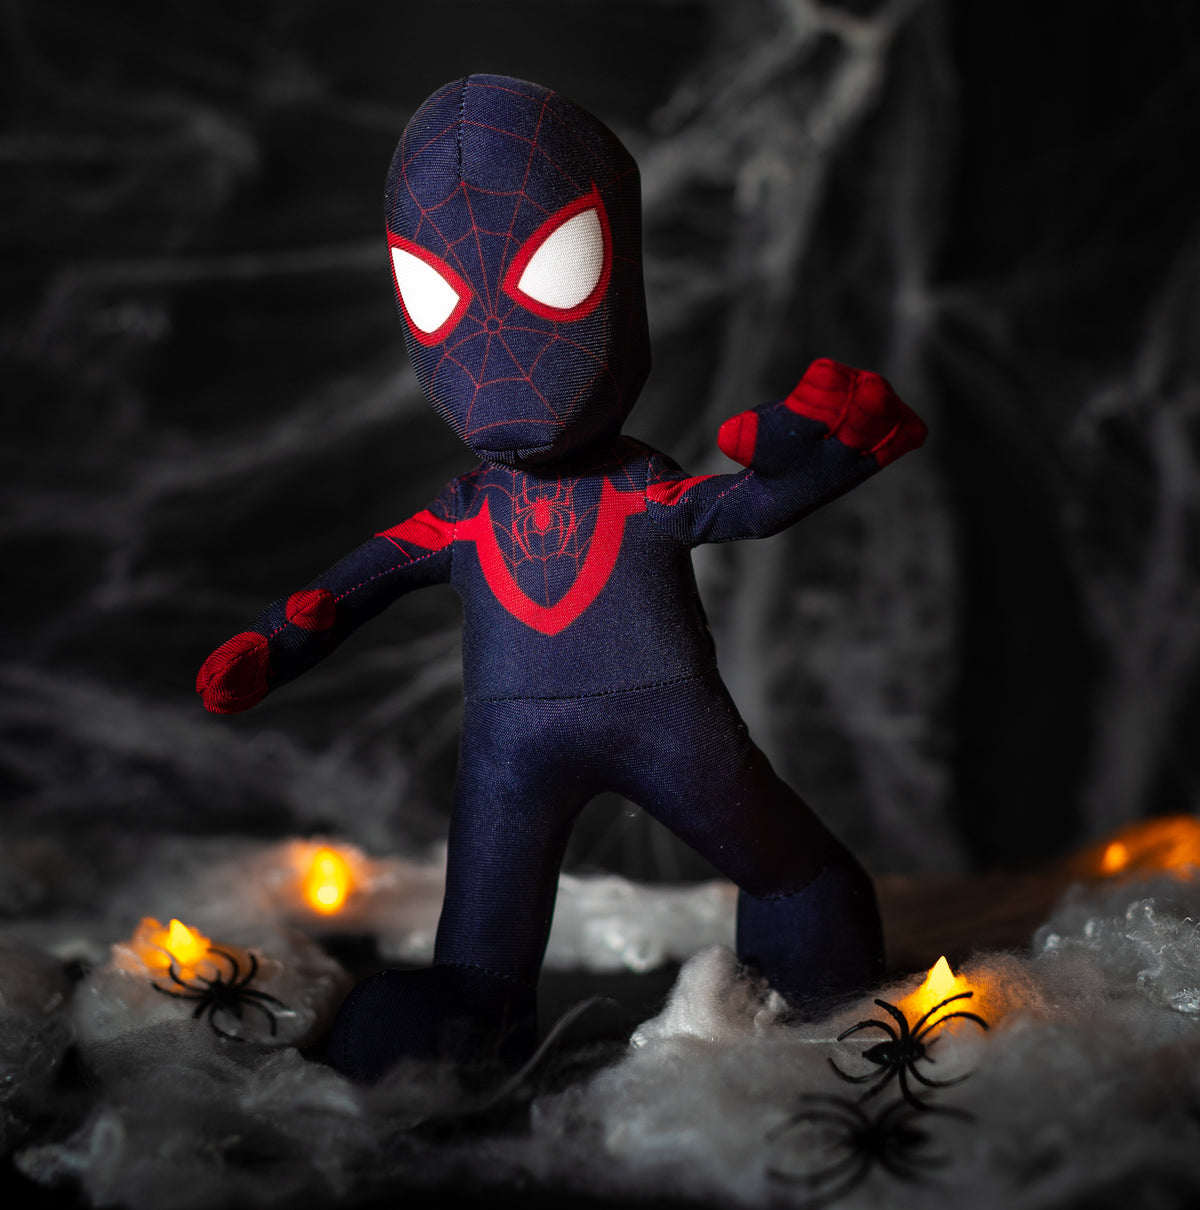 Marvel Miles Morales Spider-Man 10&quot; Plush Figure